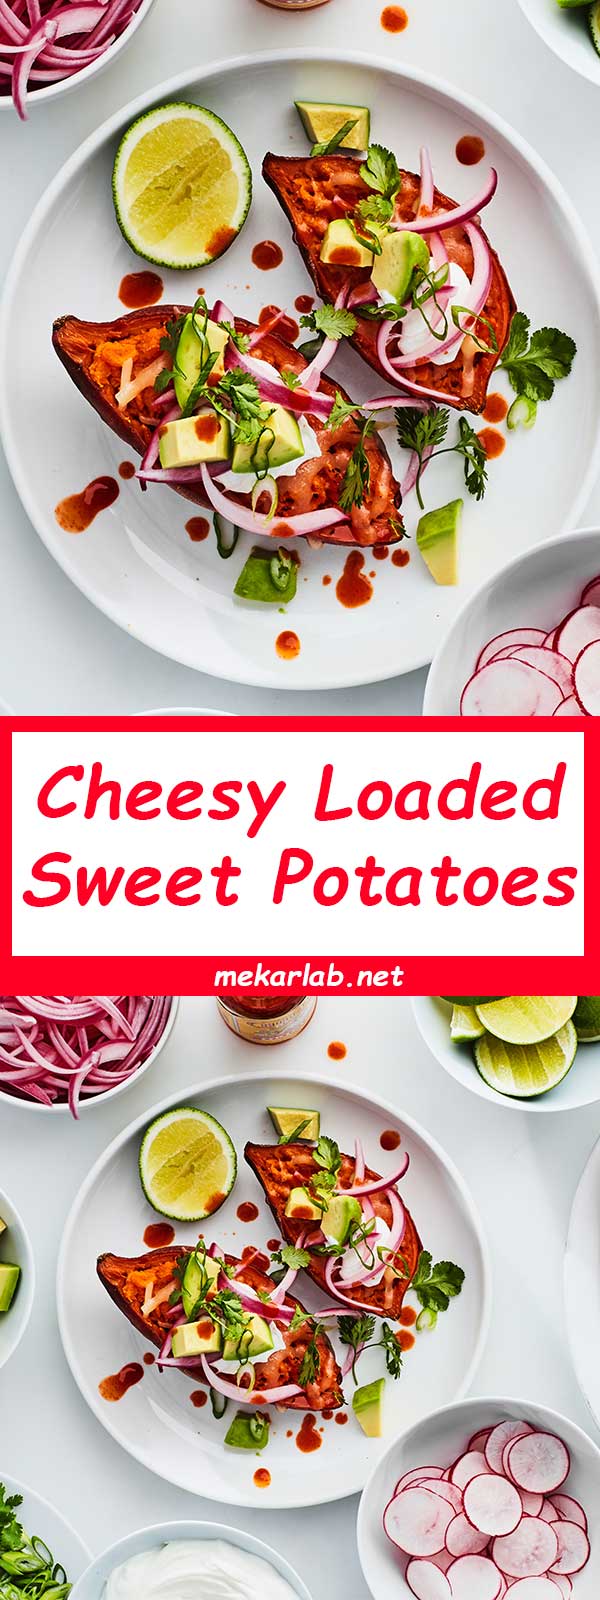 Cheesy Loaded Sweet Potatoes